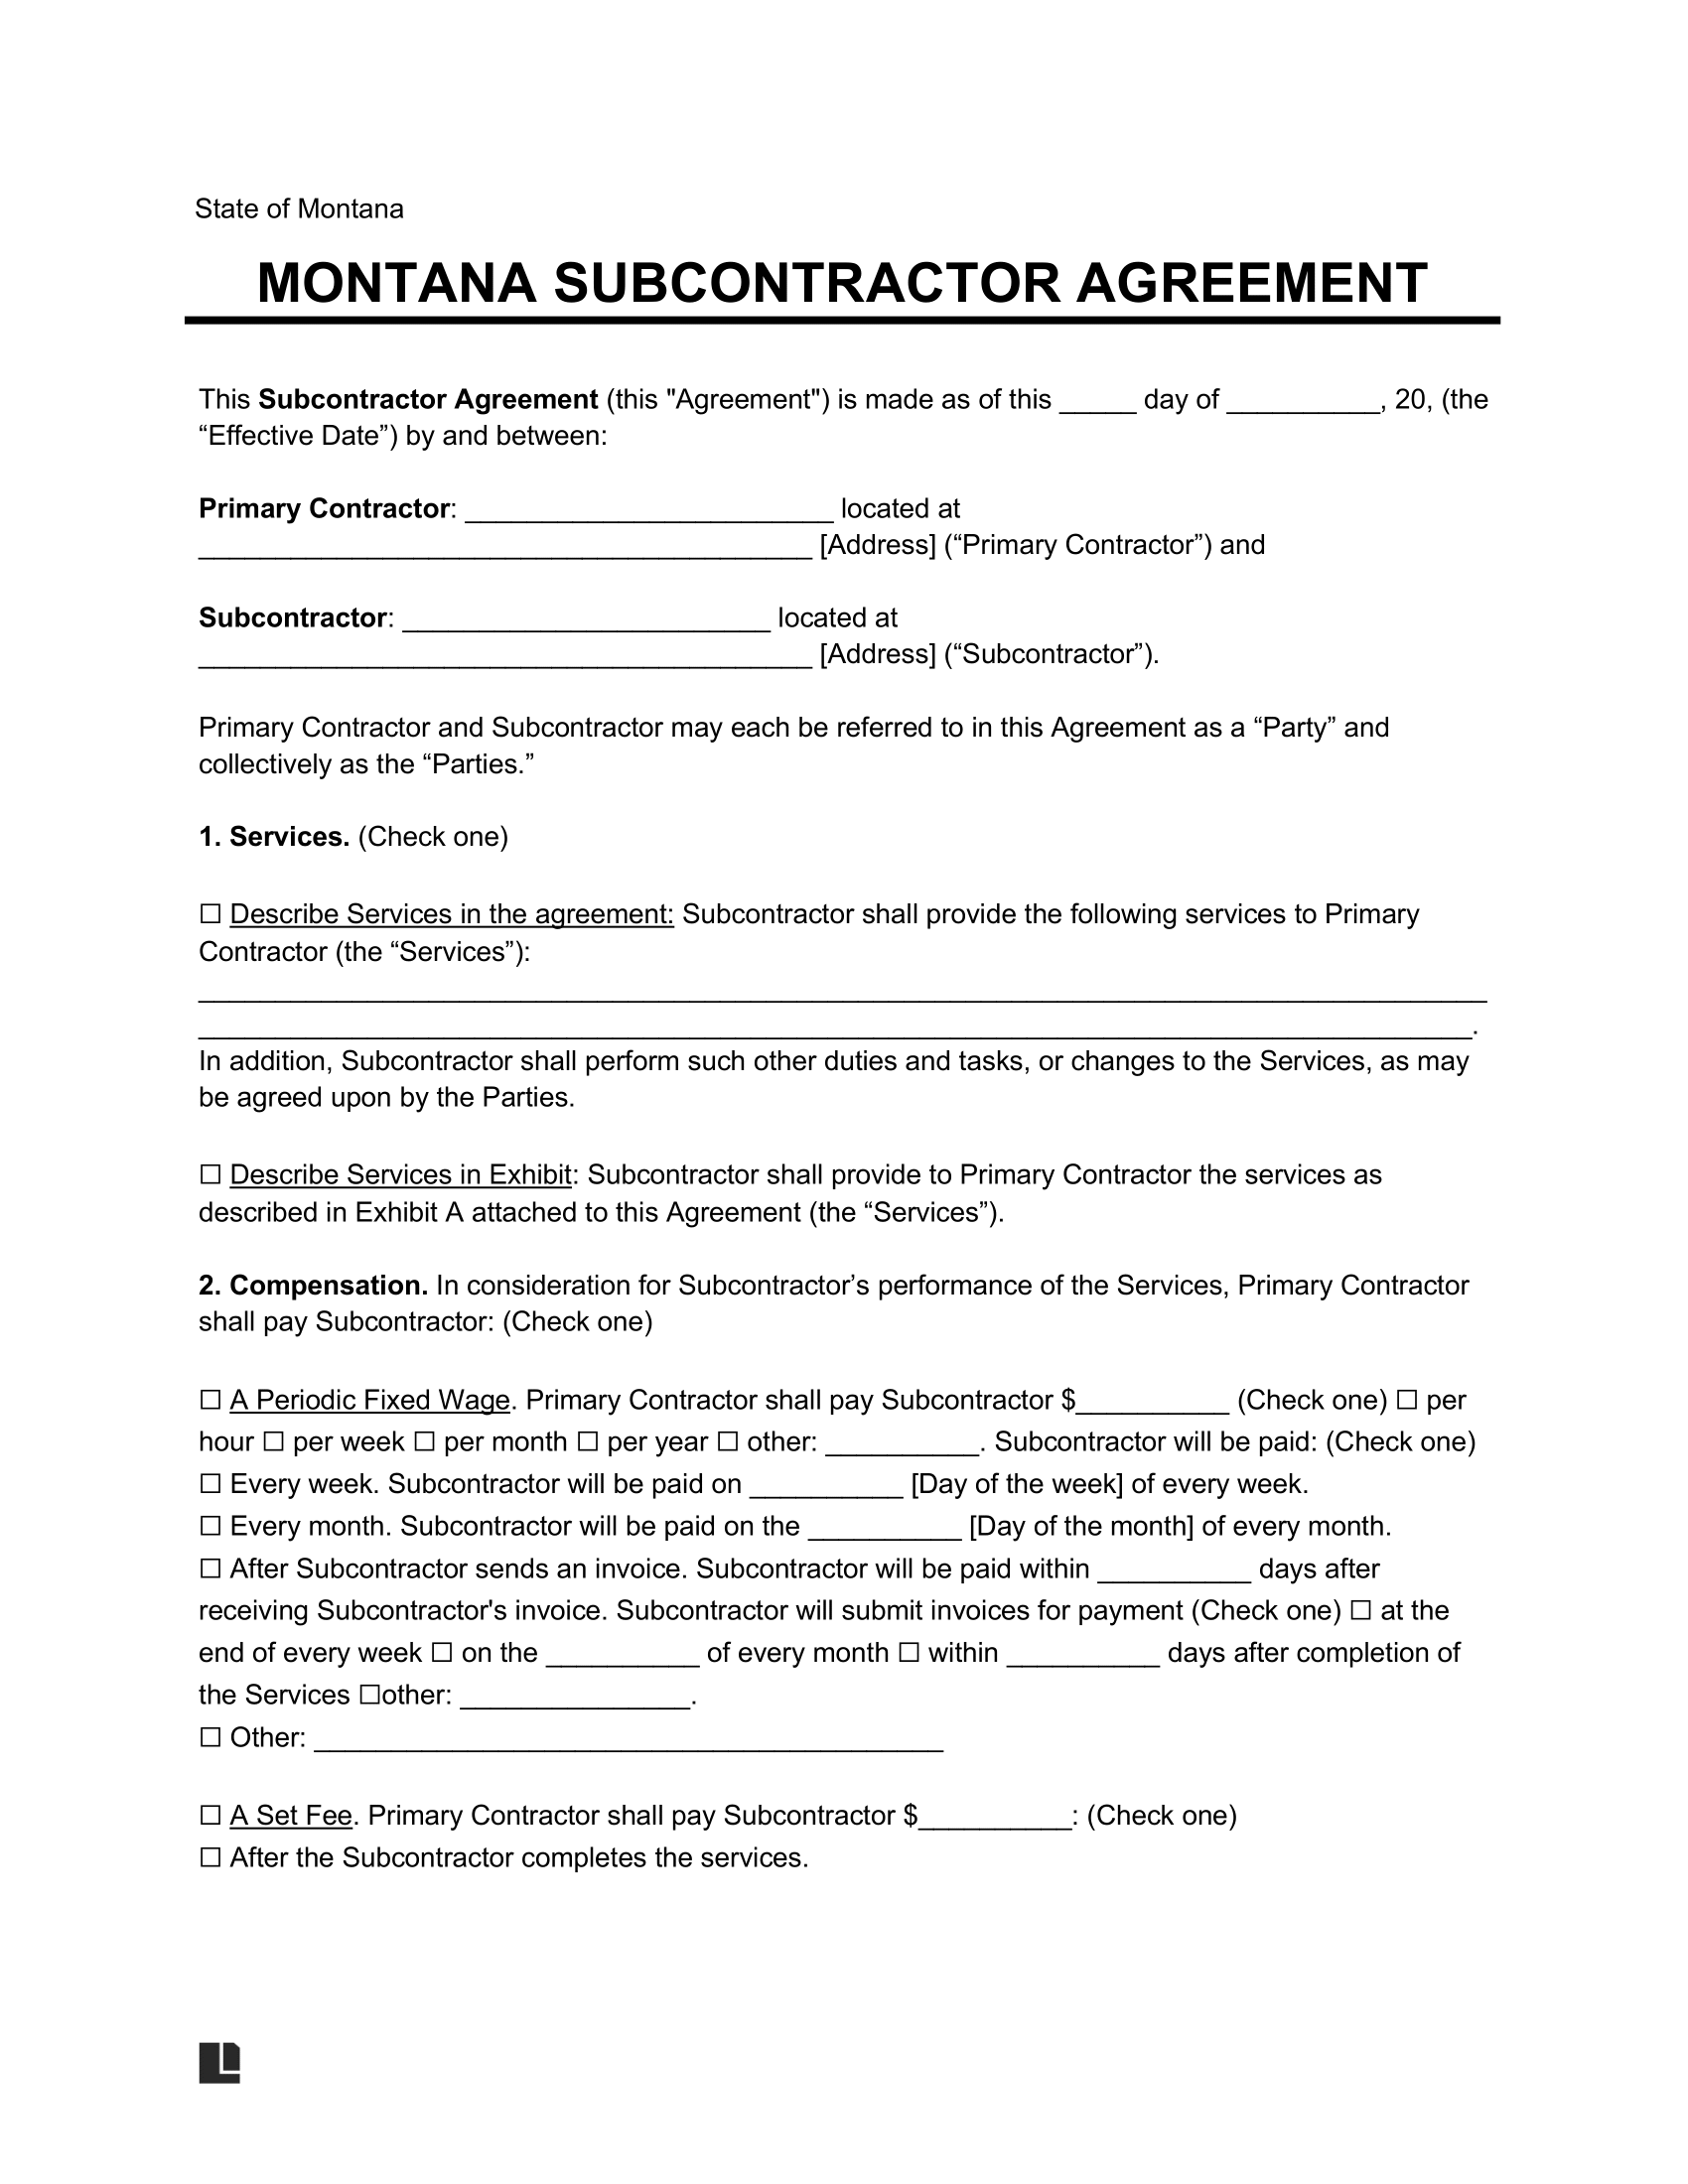 Montana Subcontractor Agreement Template